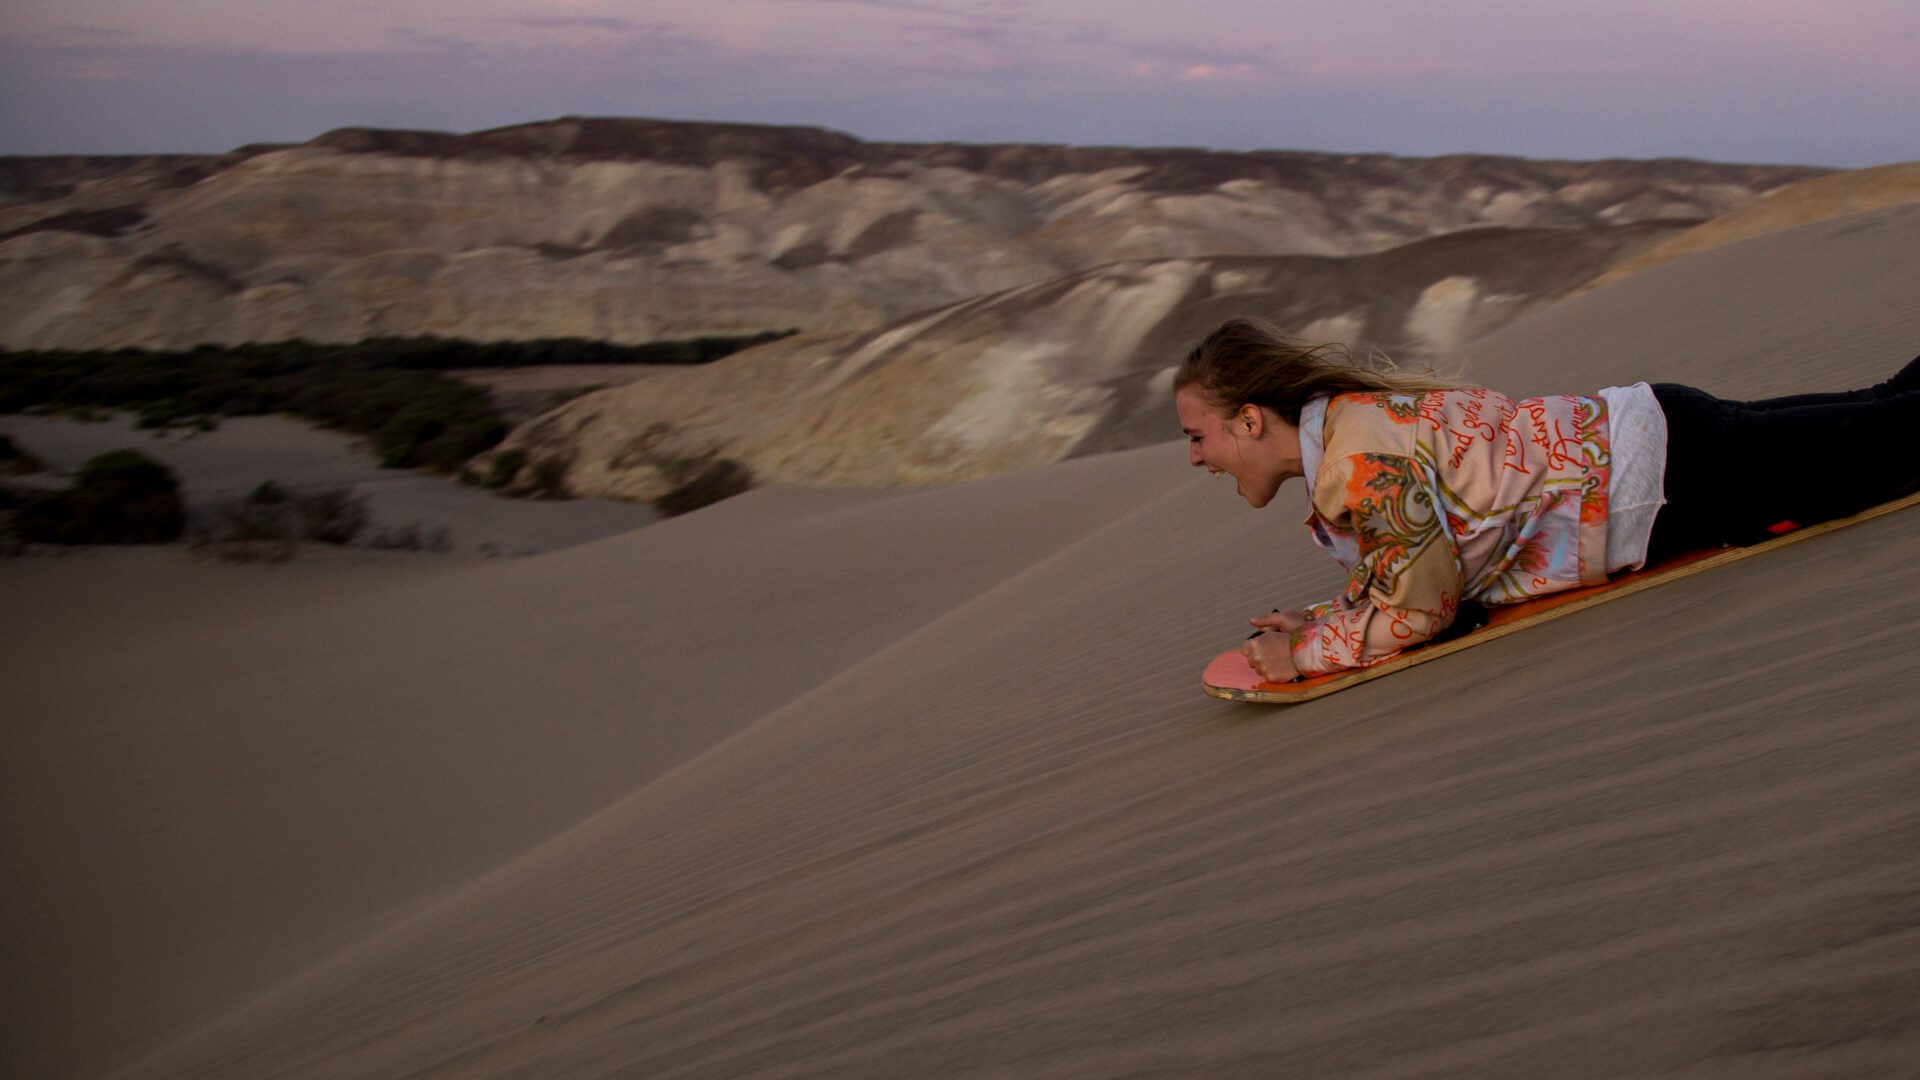 11Girl sandboarding down a dune in the Nazca desert | RESPONSible Travel Peru